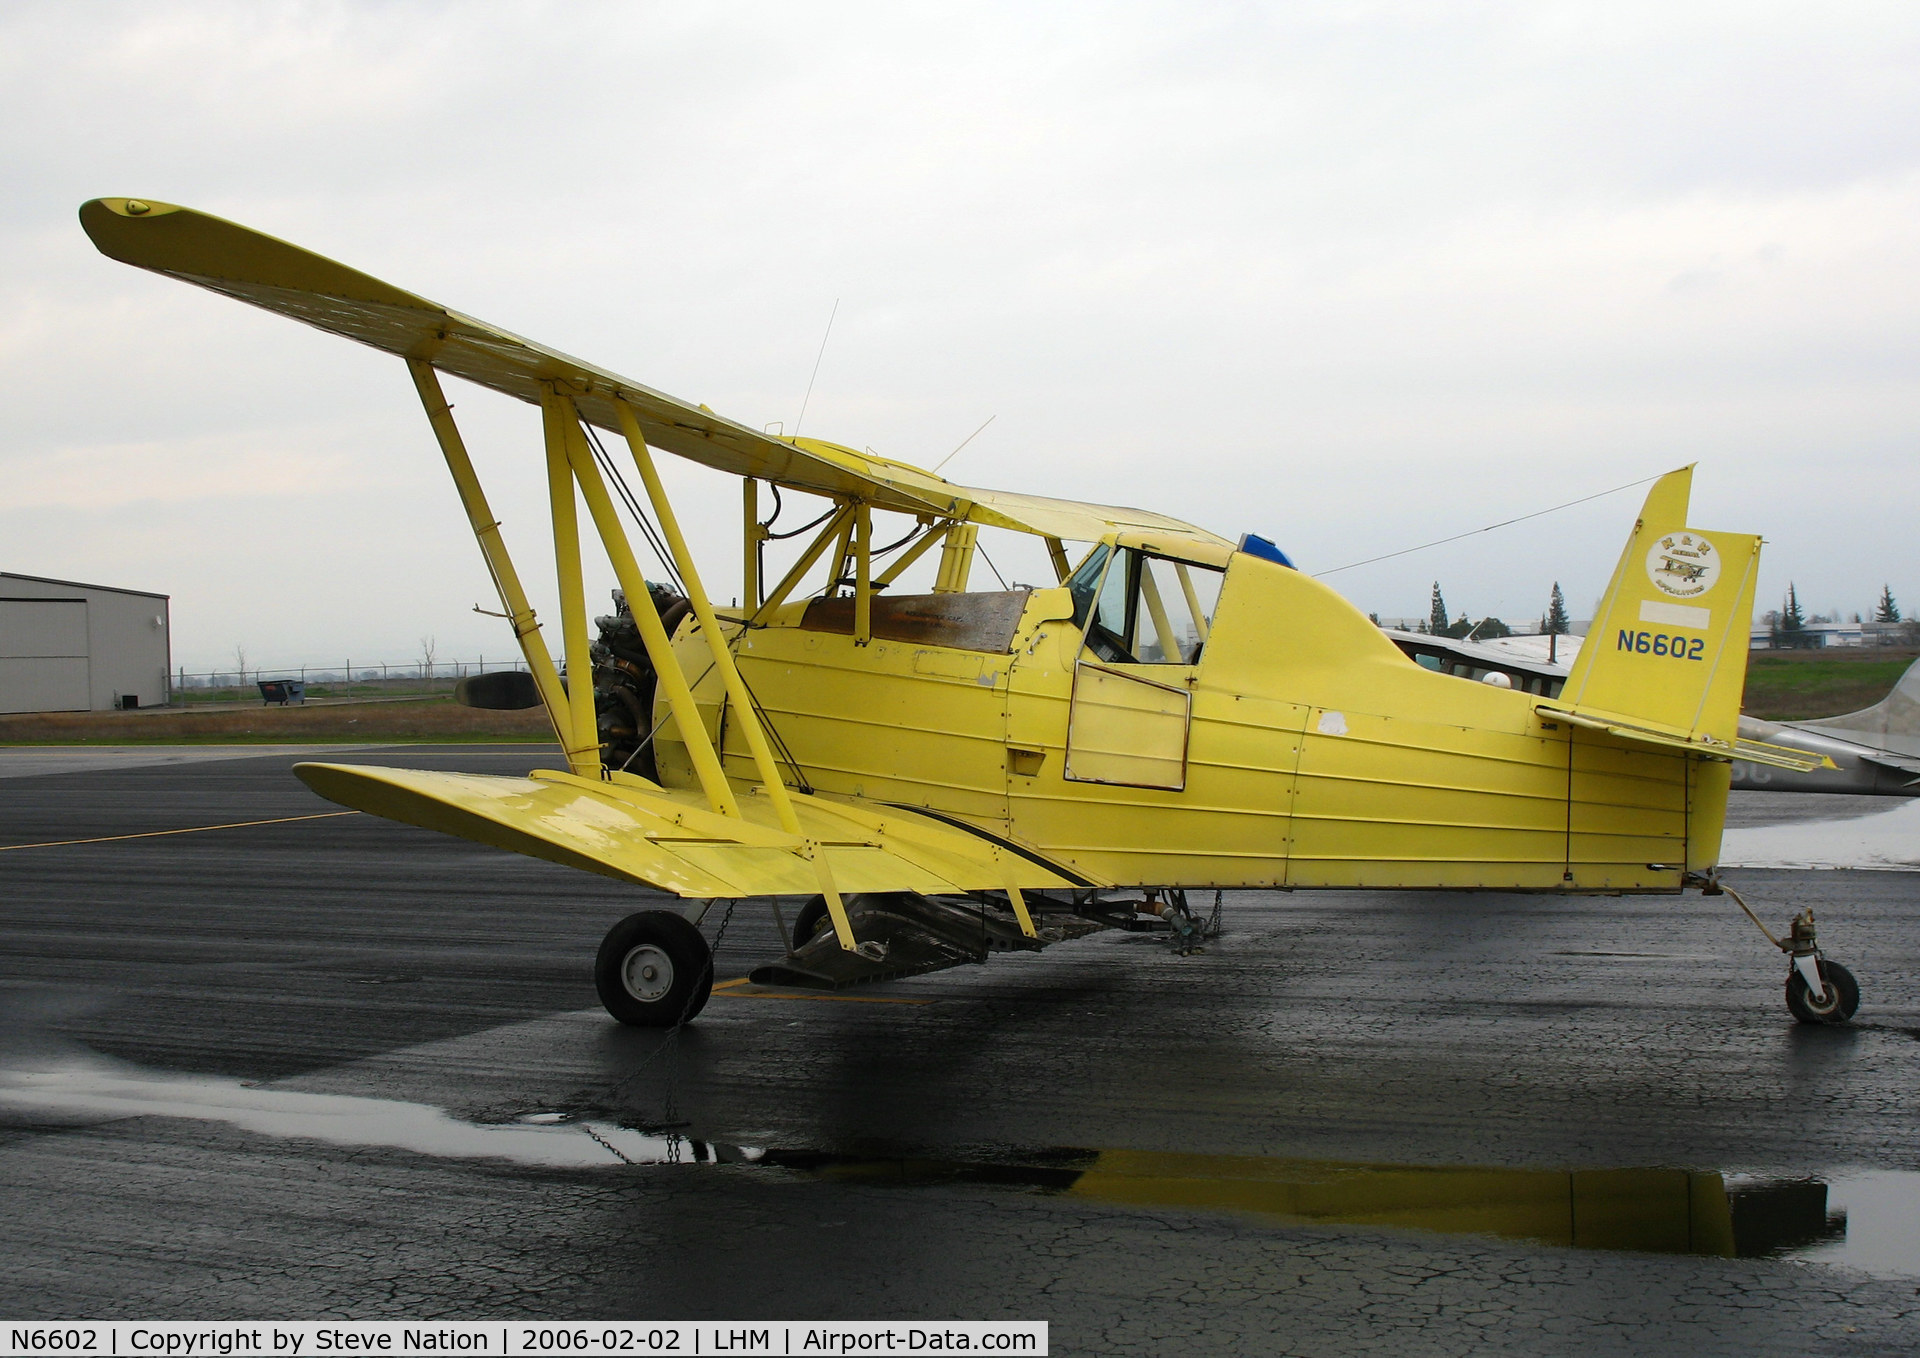 N6602, 1970 Grumman G-164A C/N 740, K & K Aerial Applicators (Yerington, NV) 1970 Grumman G-164A with spreader and no rudder @ Lincoln Municipal Airport, CA